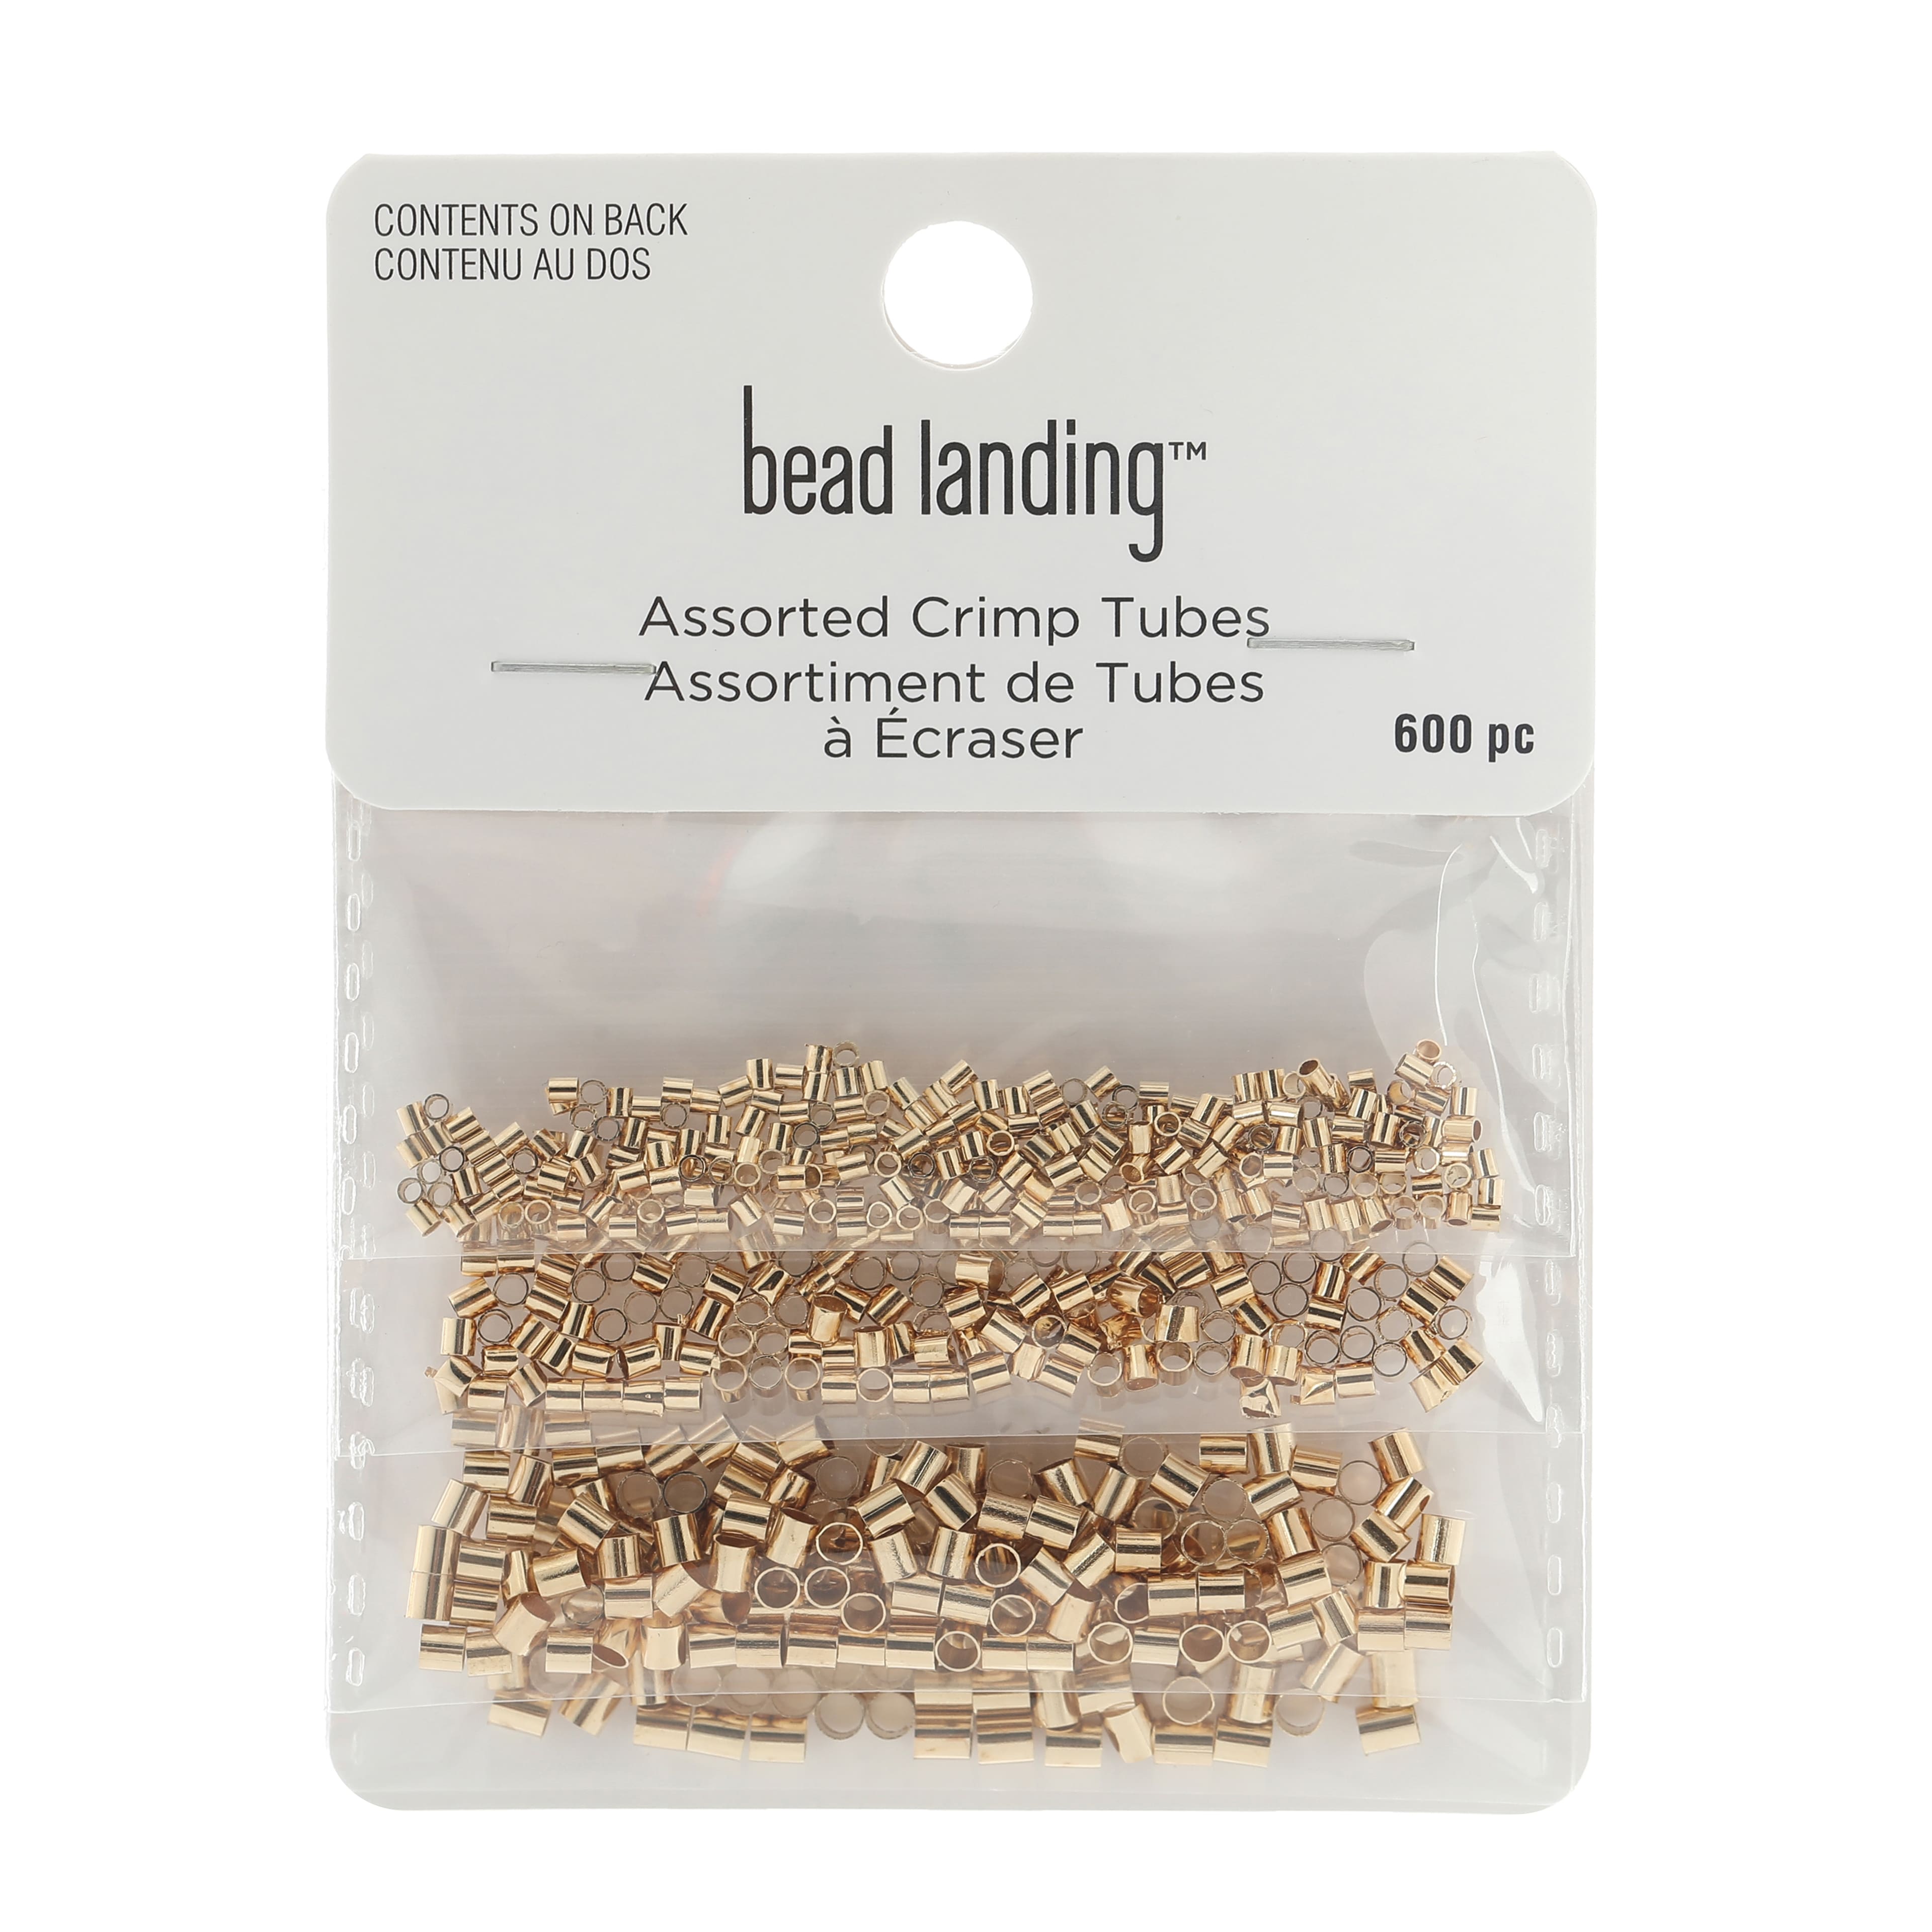 12 Packs: 600 ct. (7,200 total) Assorted Metal Crimp Tubes by Bead Landing&#x2122;